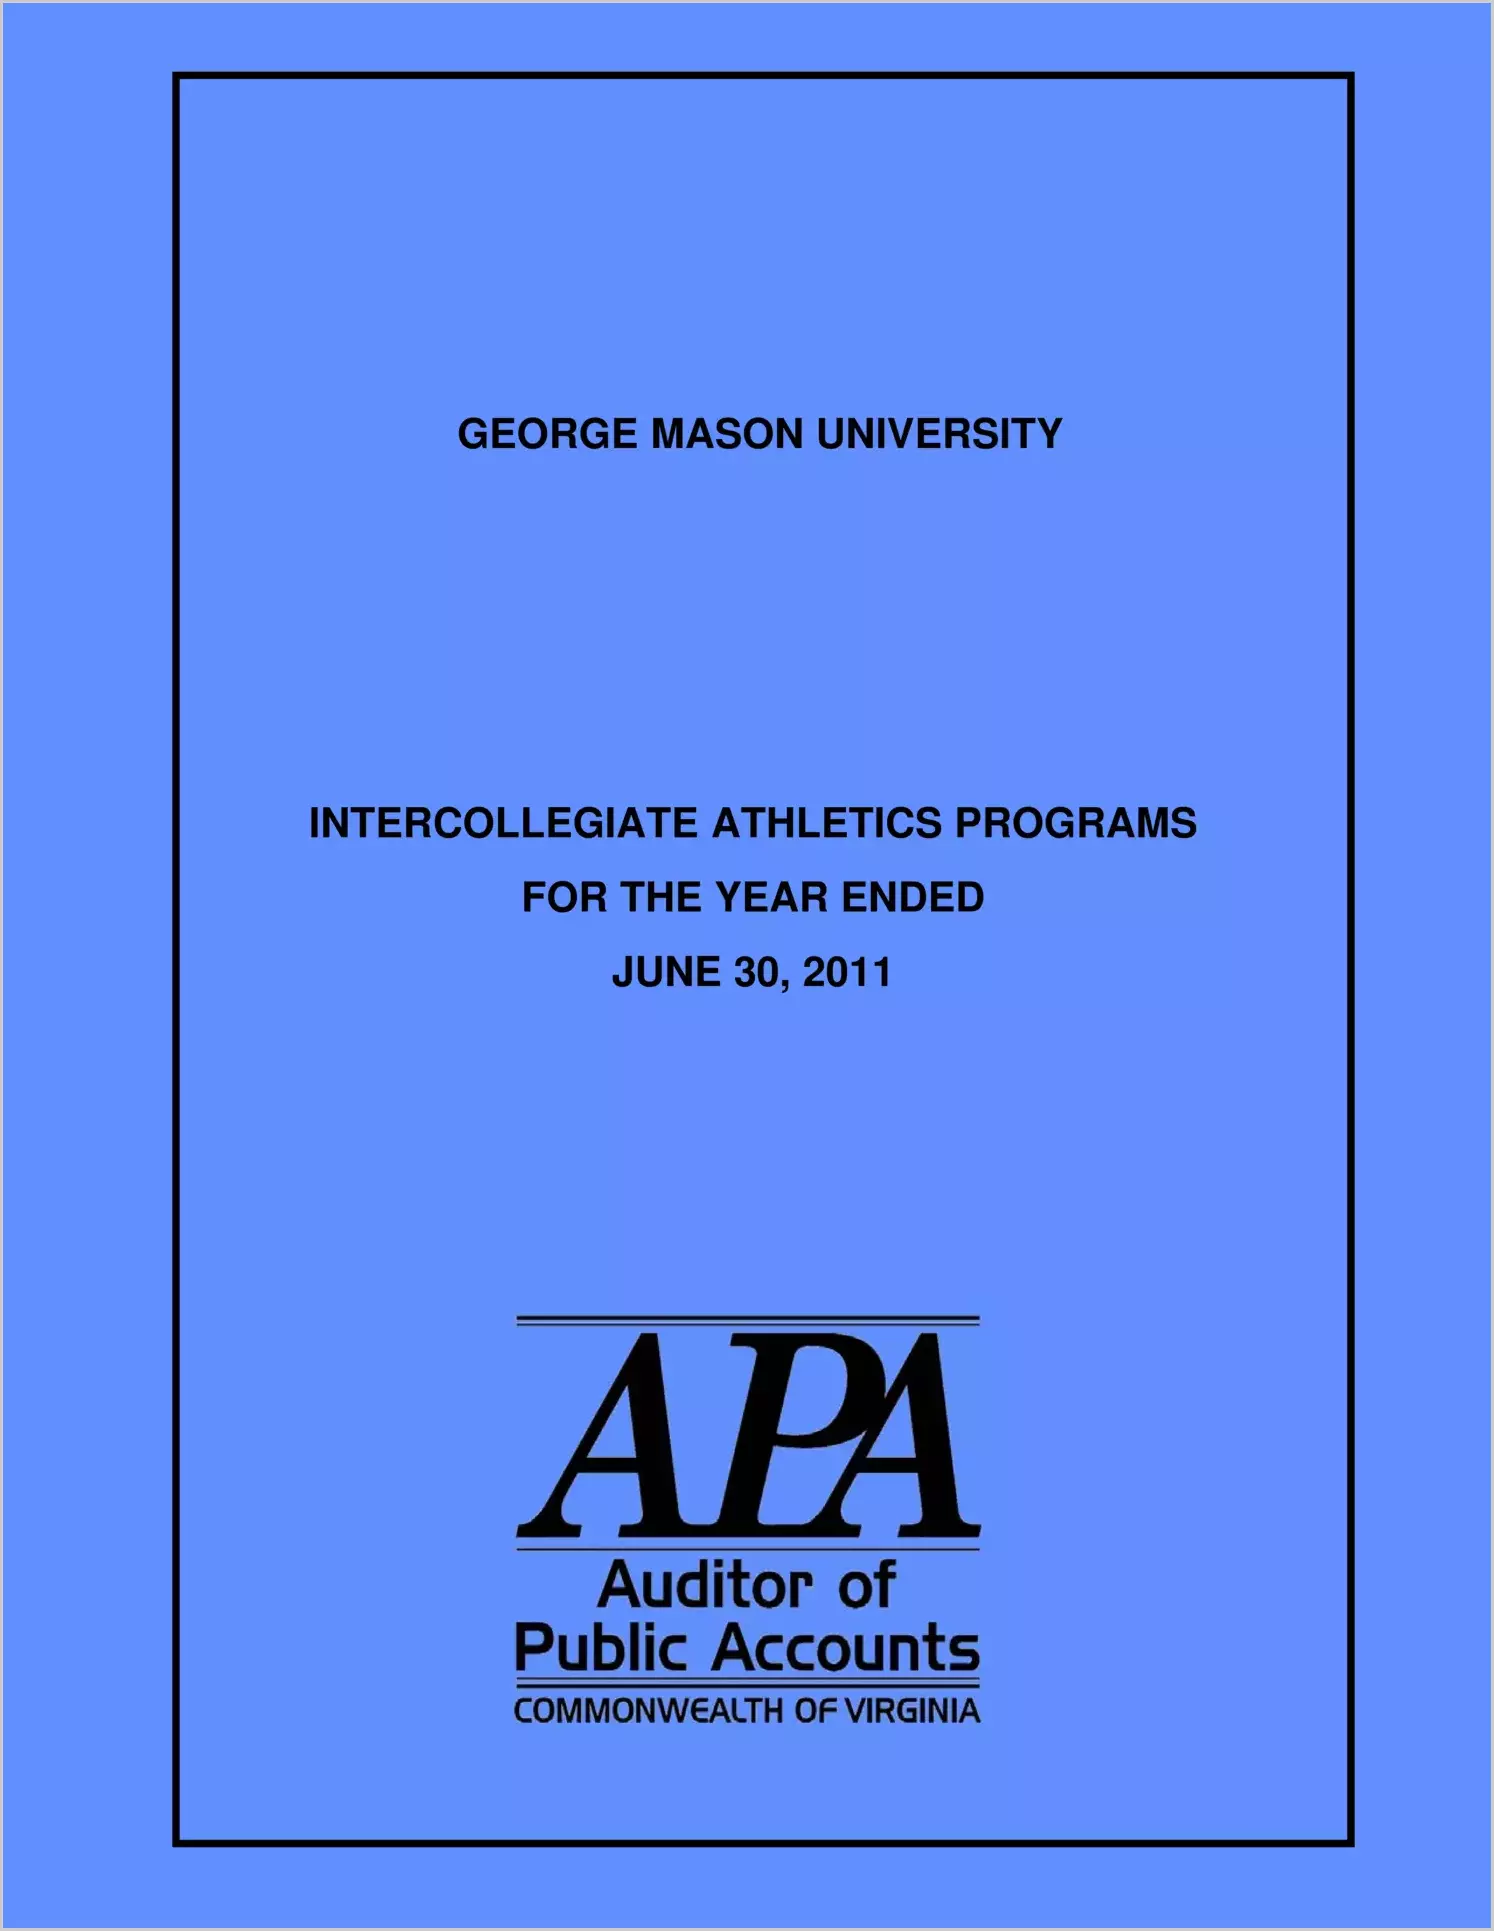 George Mason University Intercollegiate Athletics Programs for the year ended June 30, 2011